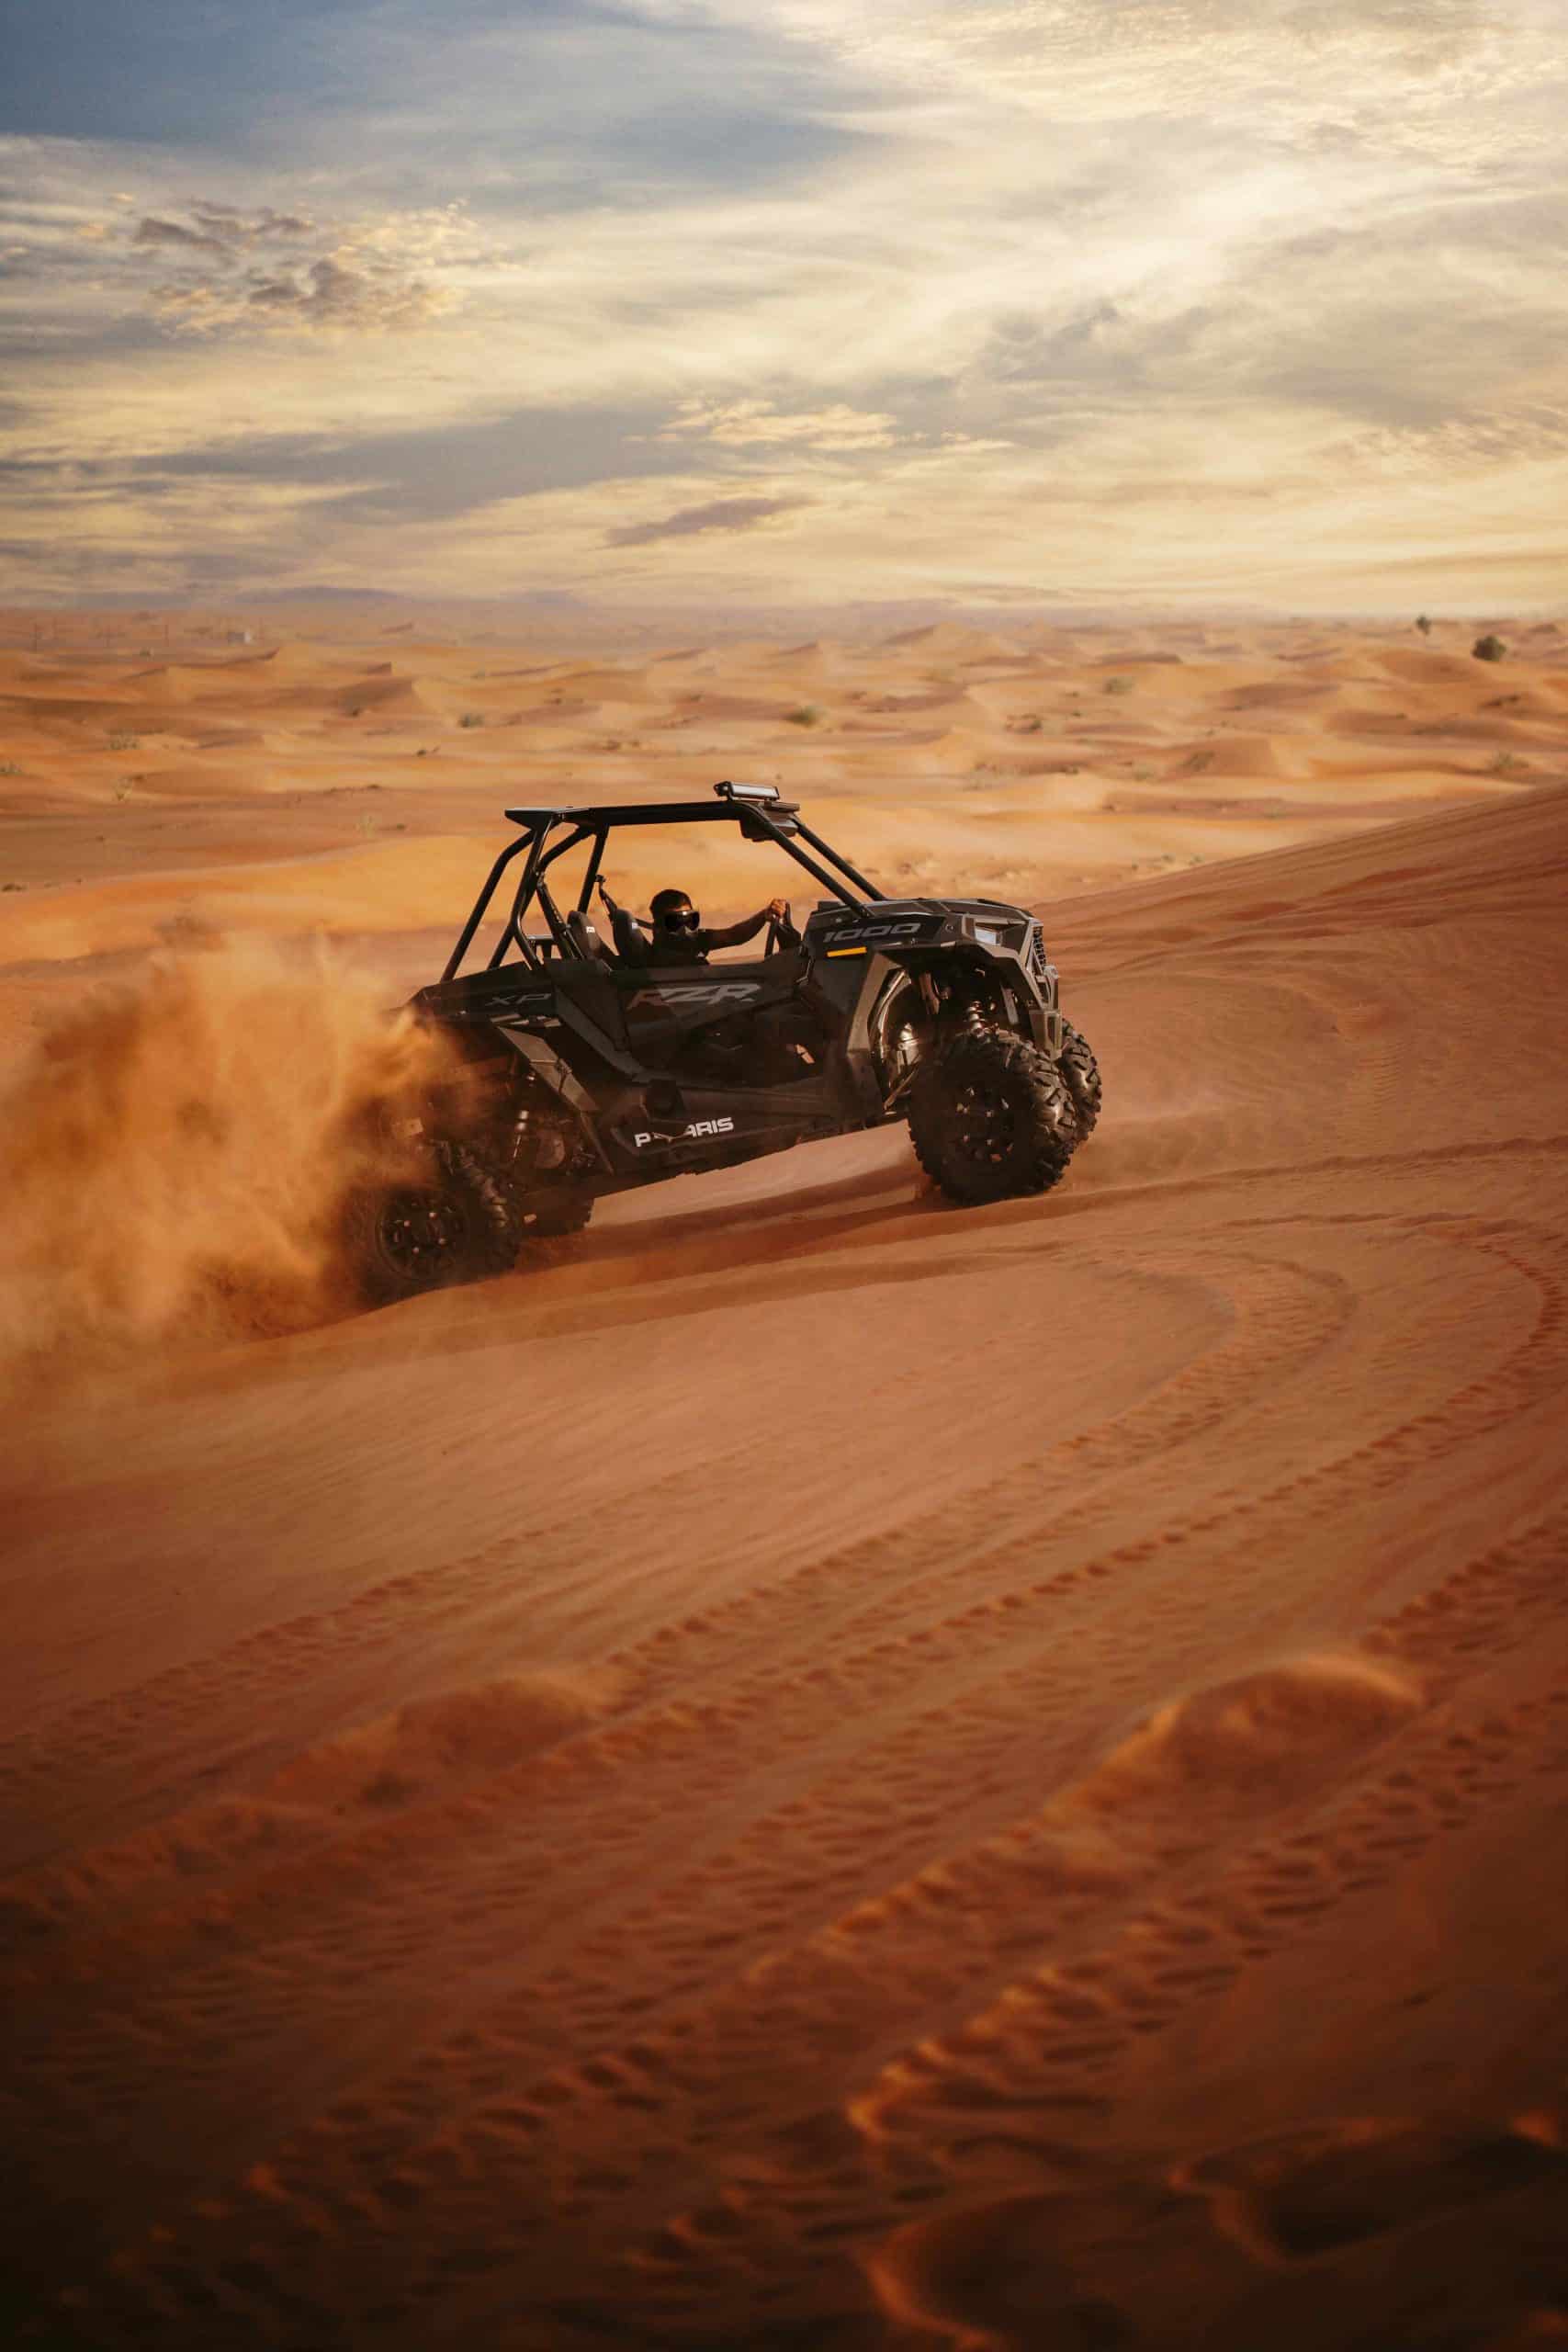 Desert Quad Safari Dubai: Things To Do In Dubai With Family